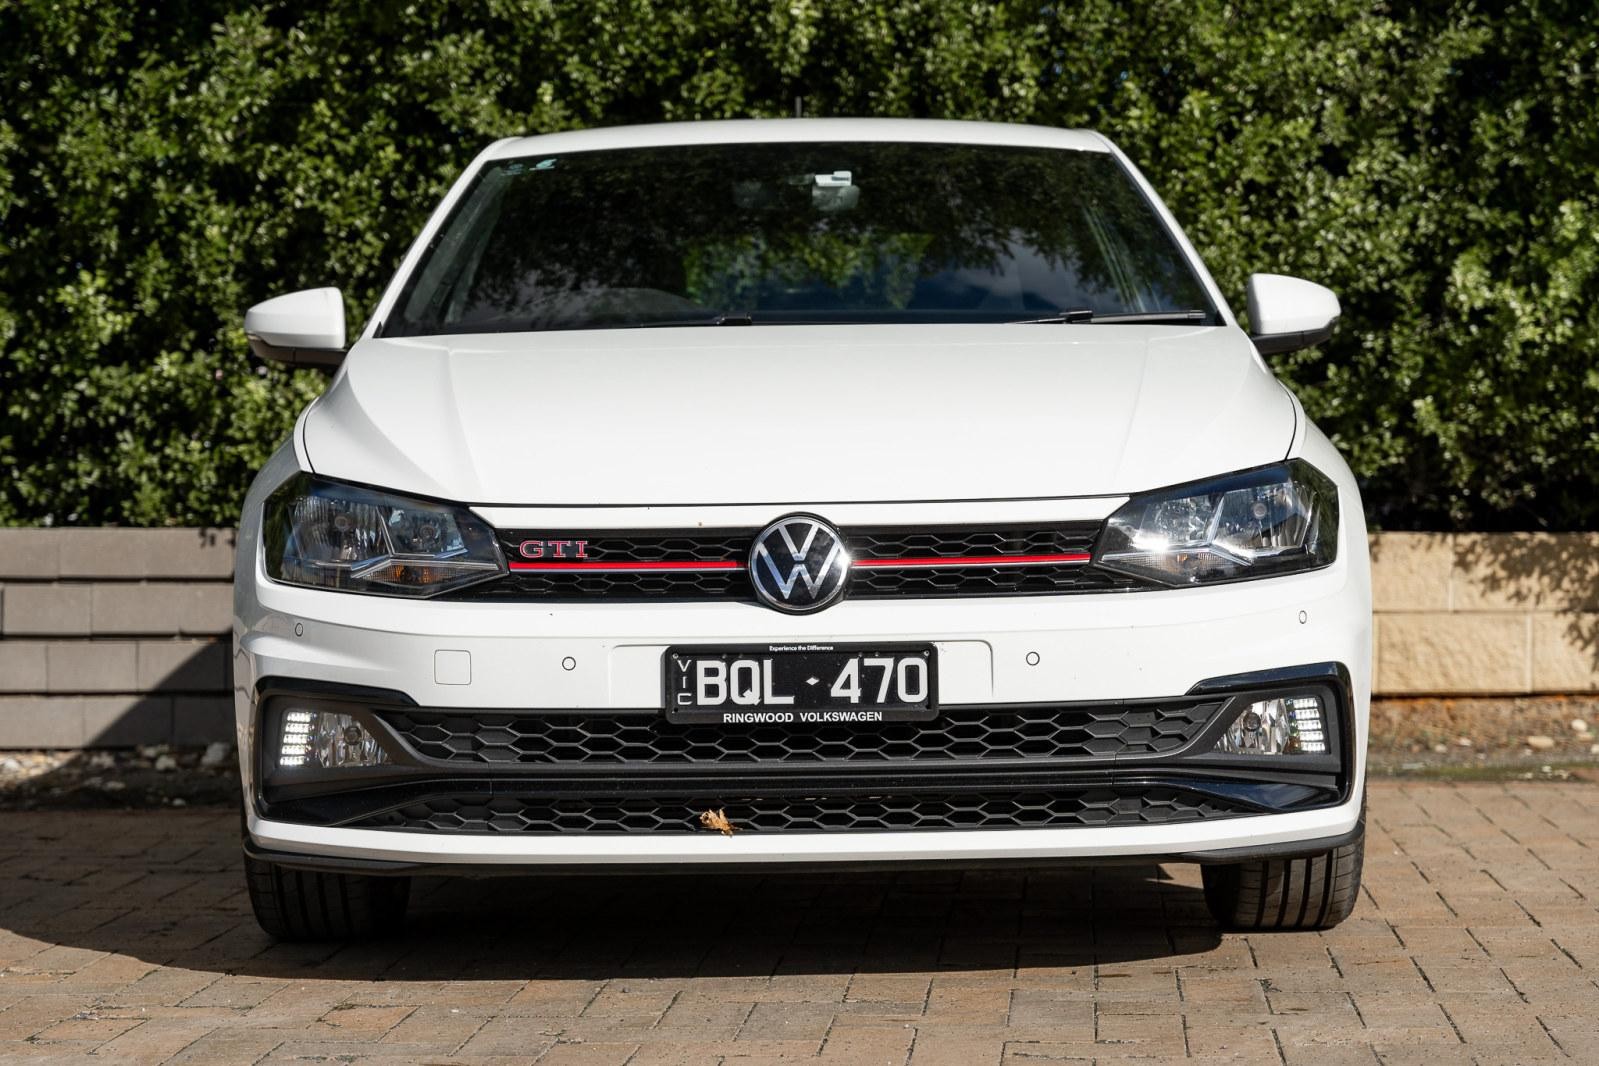 Volkswagen Polo image 2